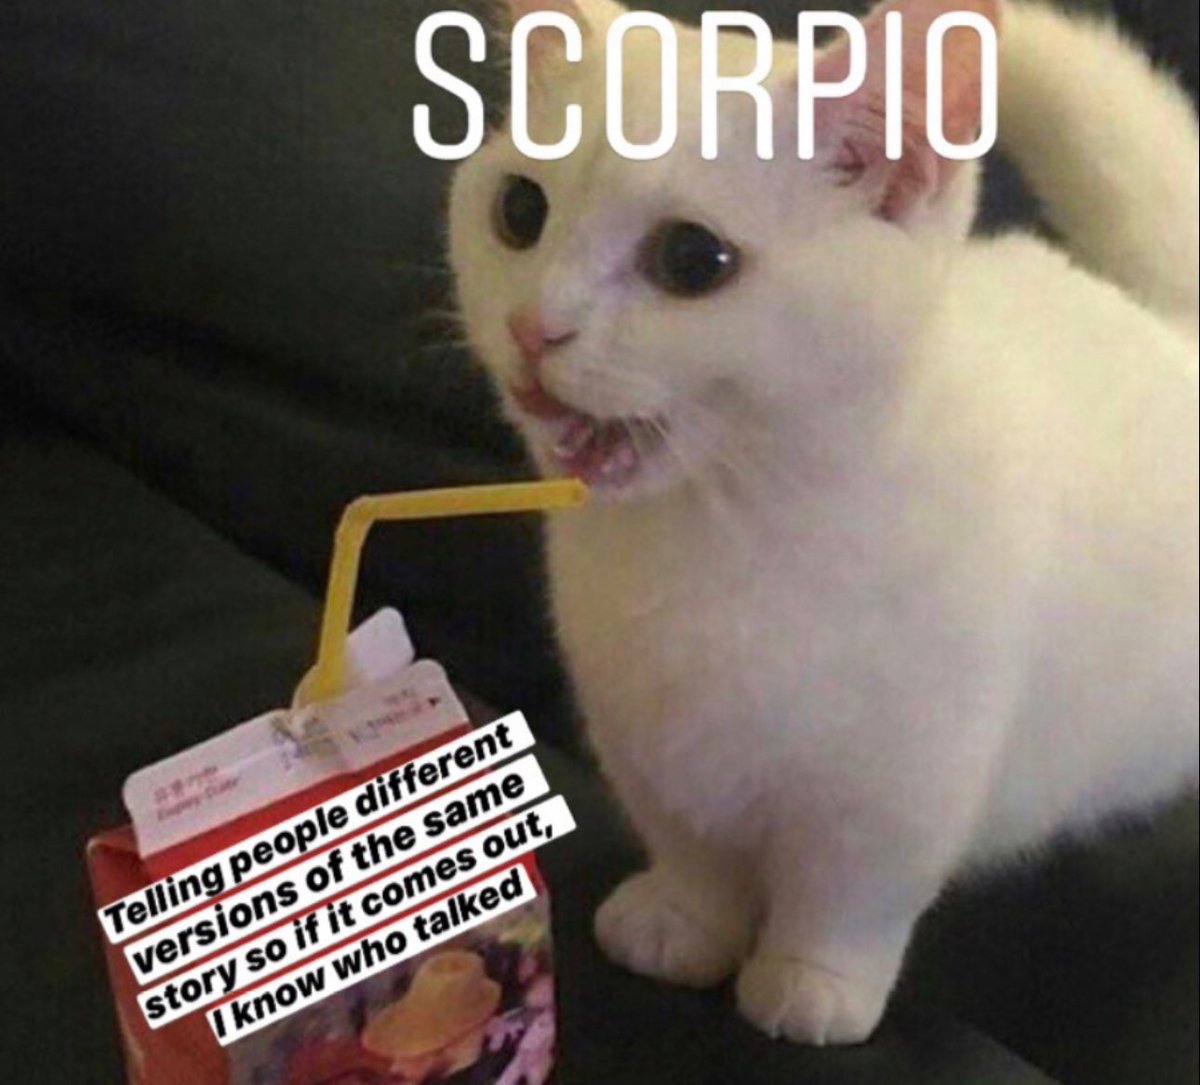 Scorpios be like